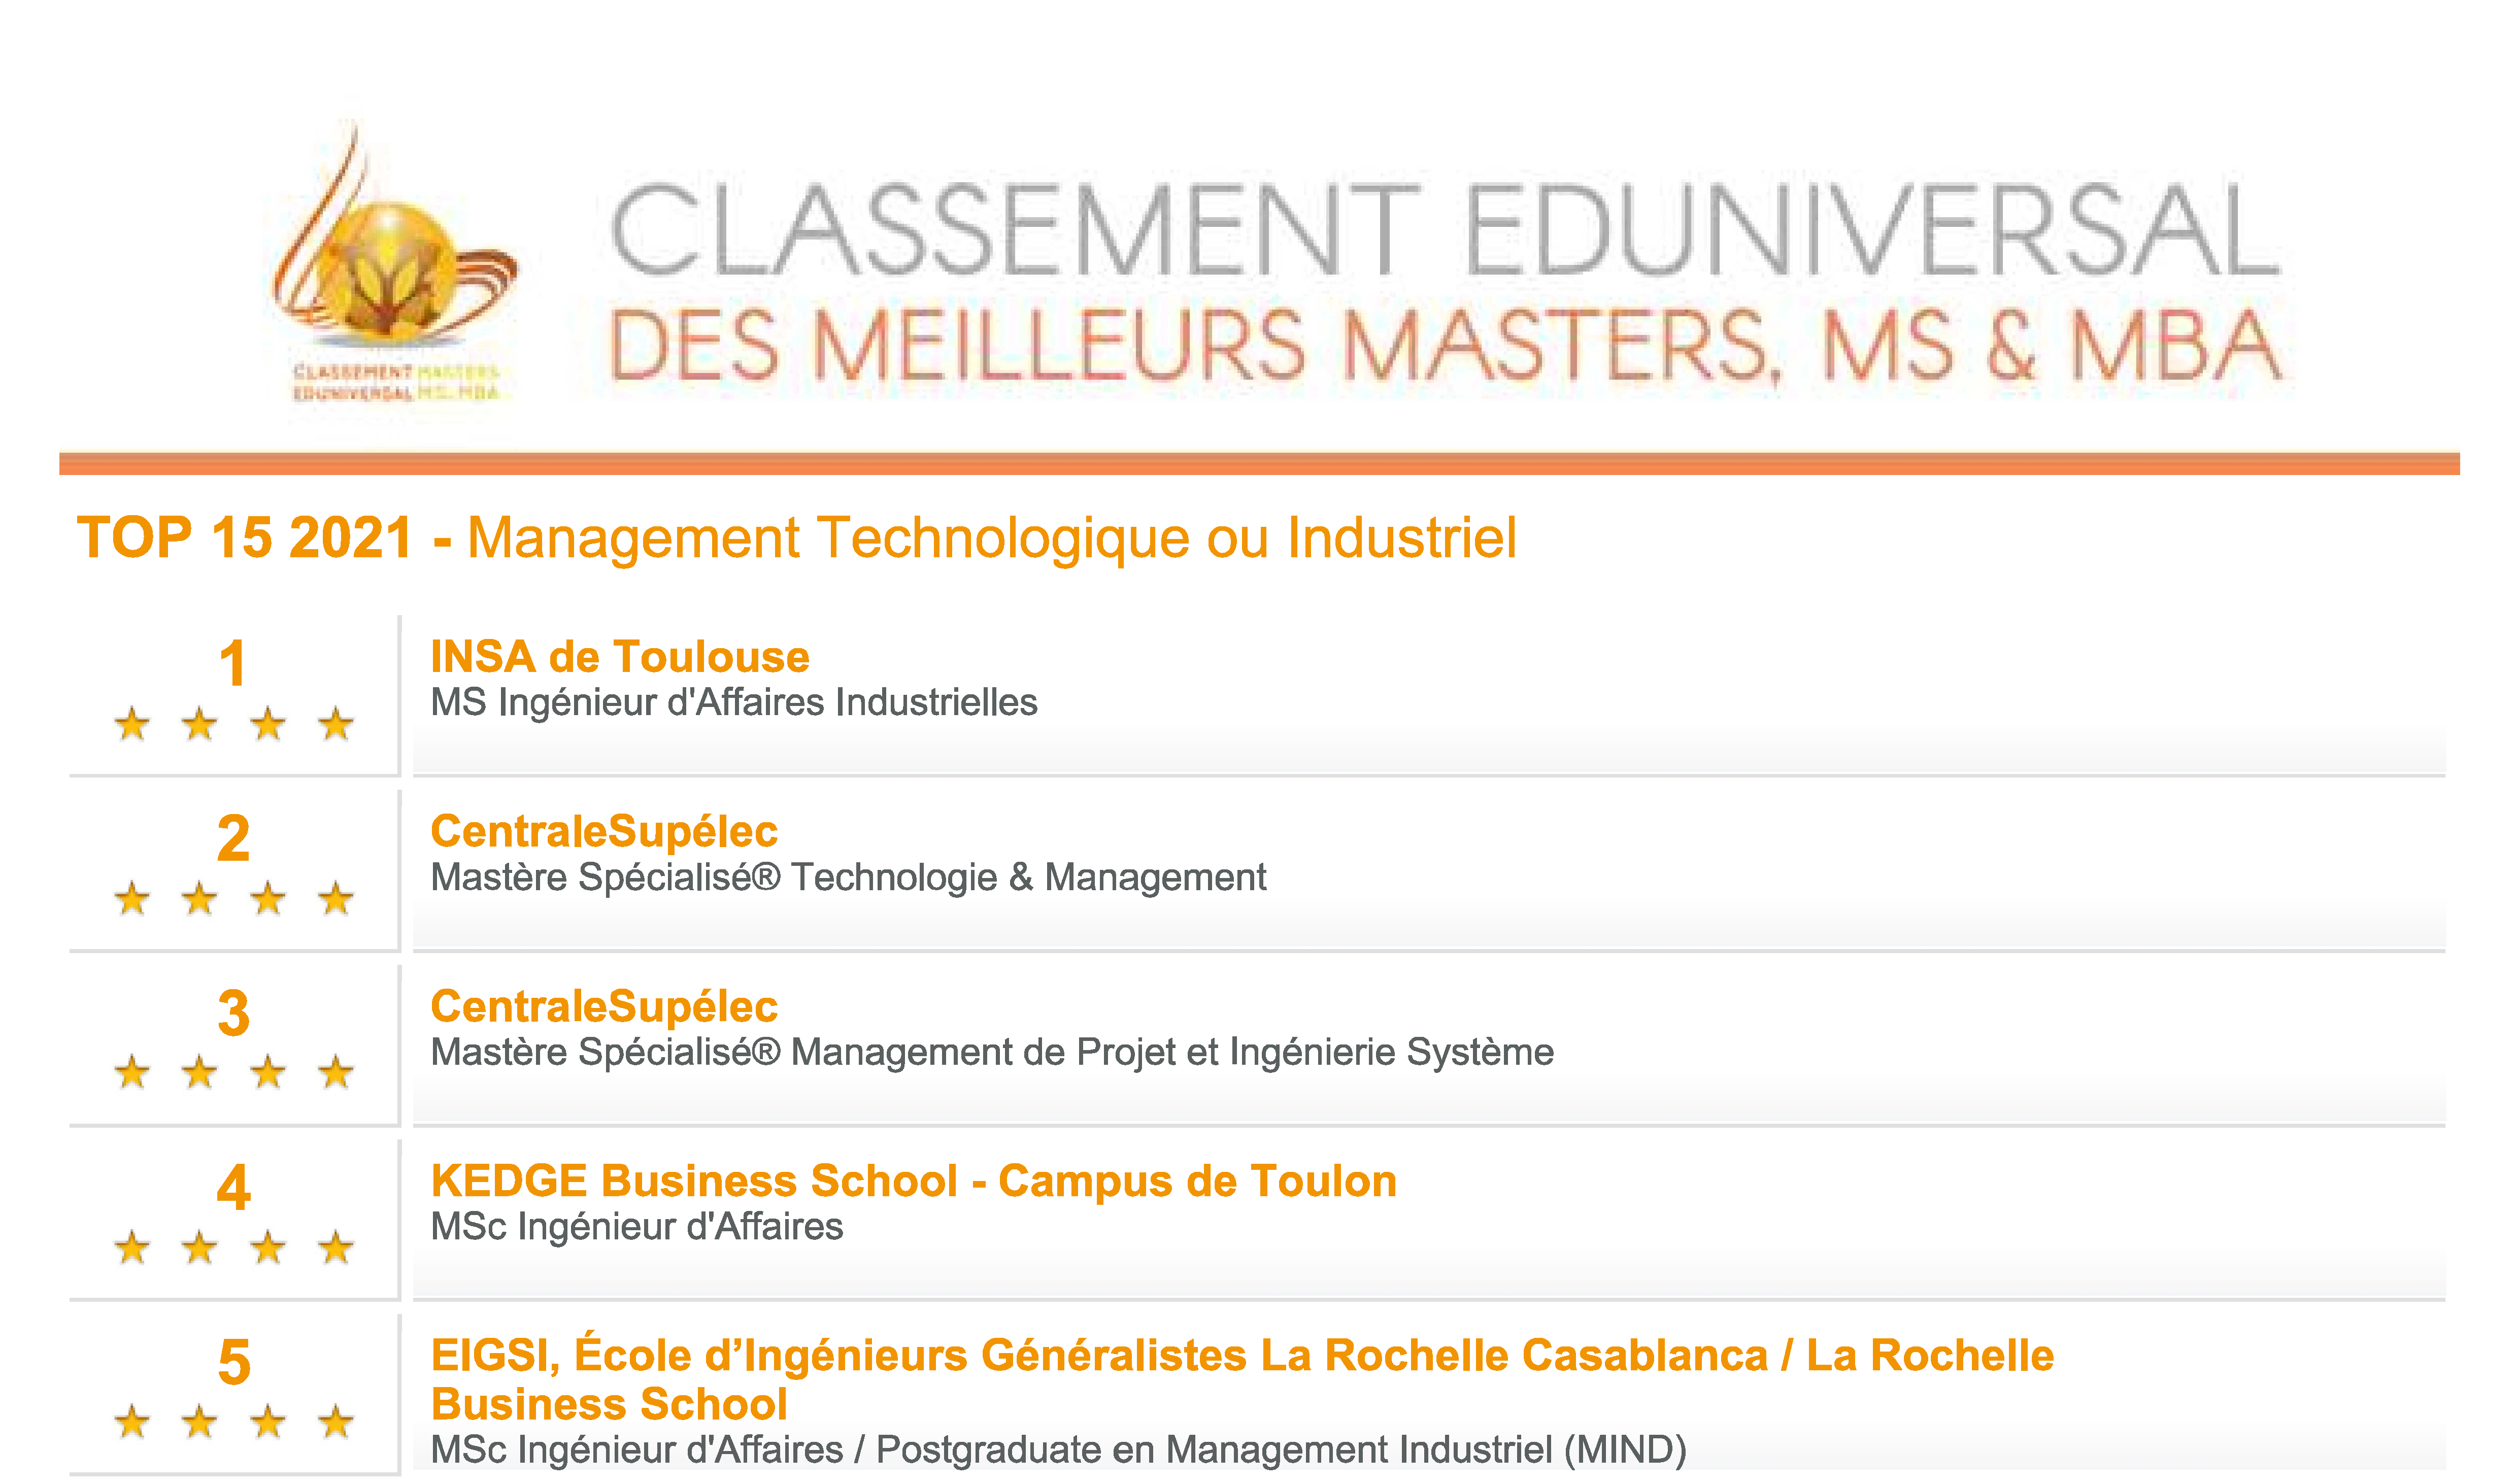 Classement Eduniversal des meilleurs Masters, MS & MBA